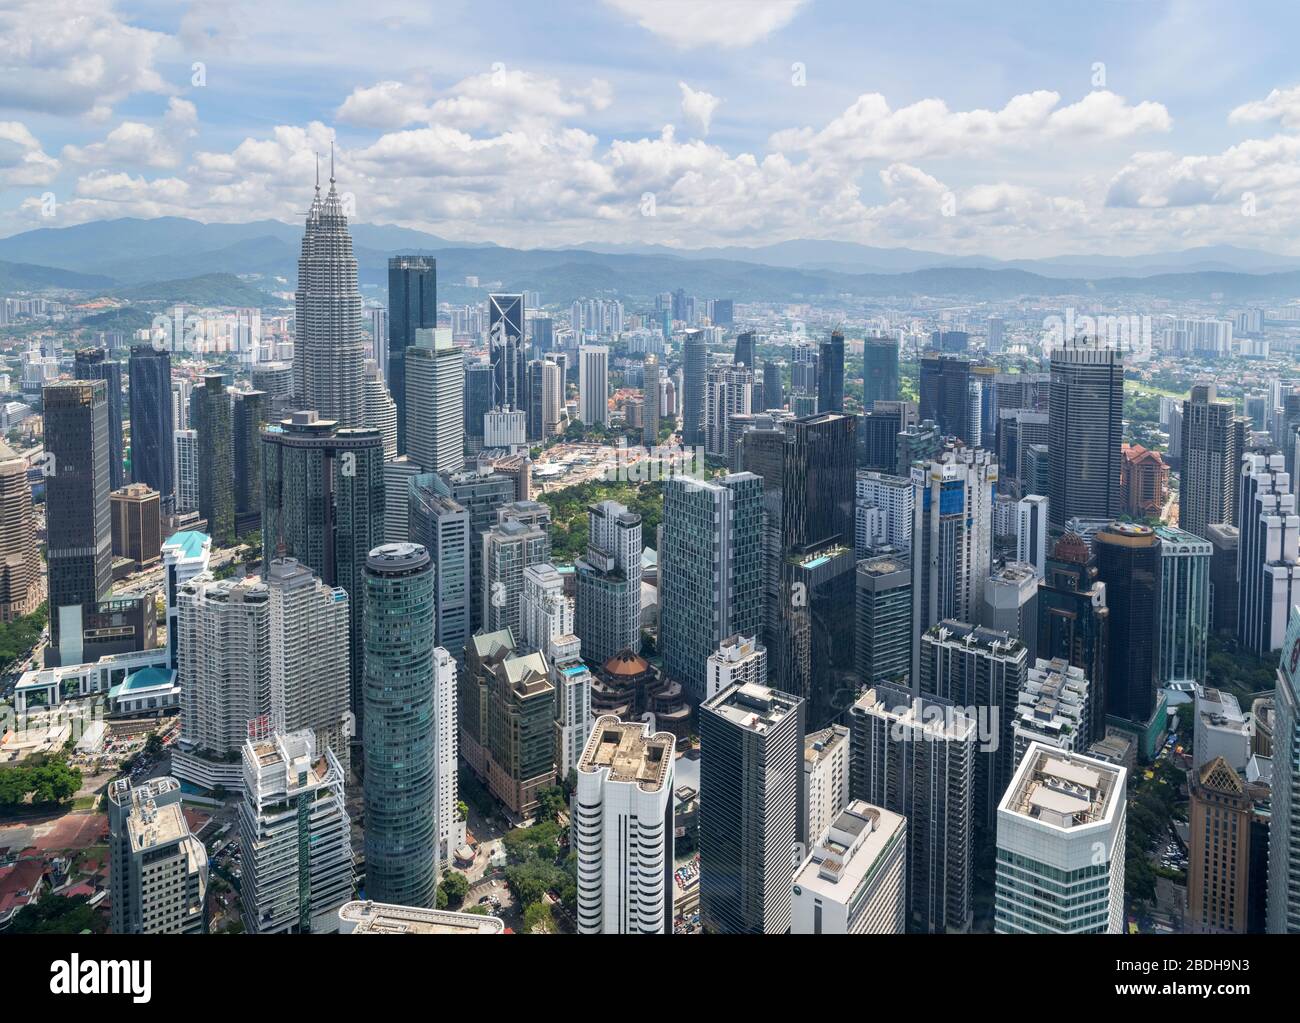 View over downtown skyline from the KL Tower (Menara Kuala Lumpur) looking towards Petronas Twin Towers and KLCC Park, Kuala Lumpur, Malaysia Stock Photo